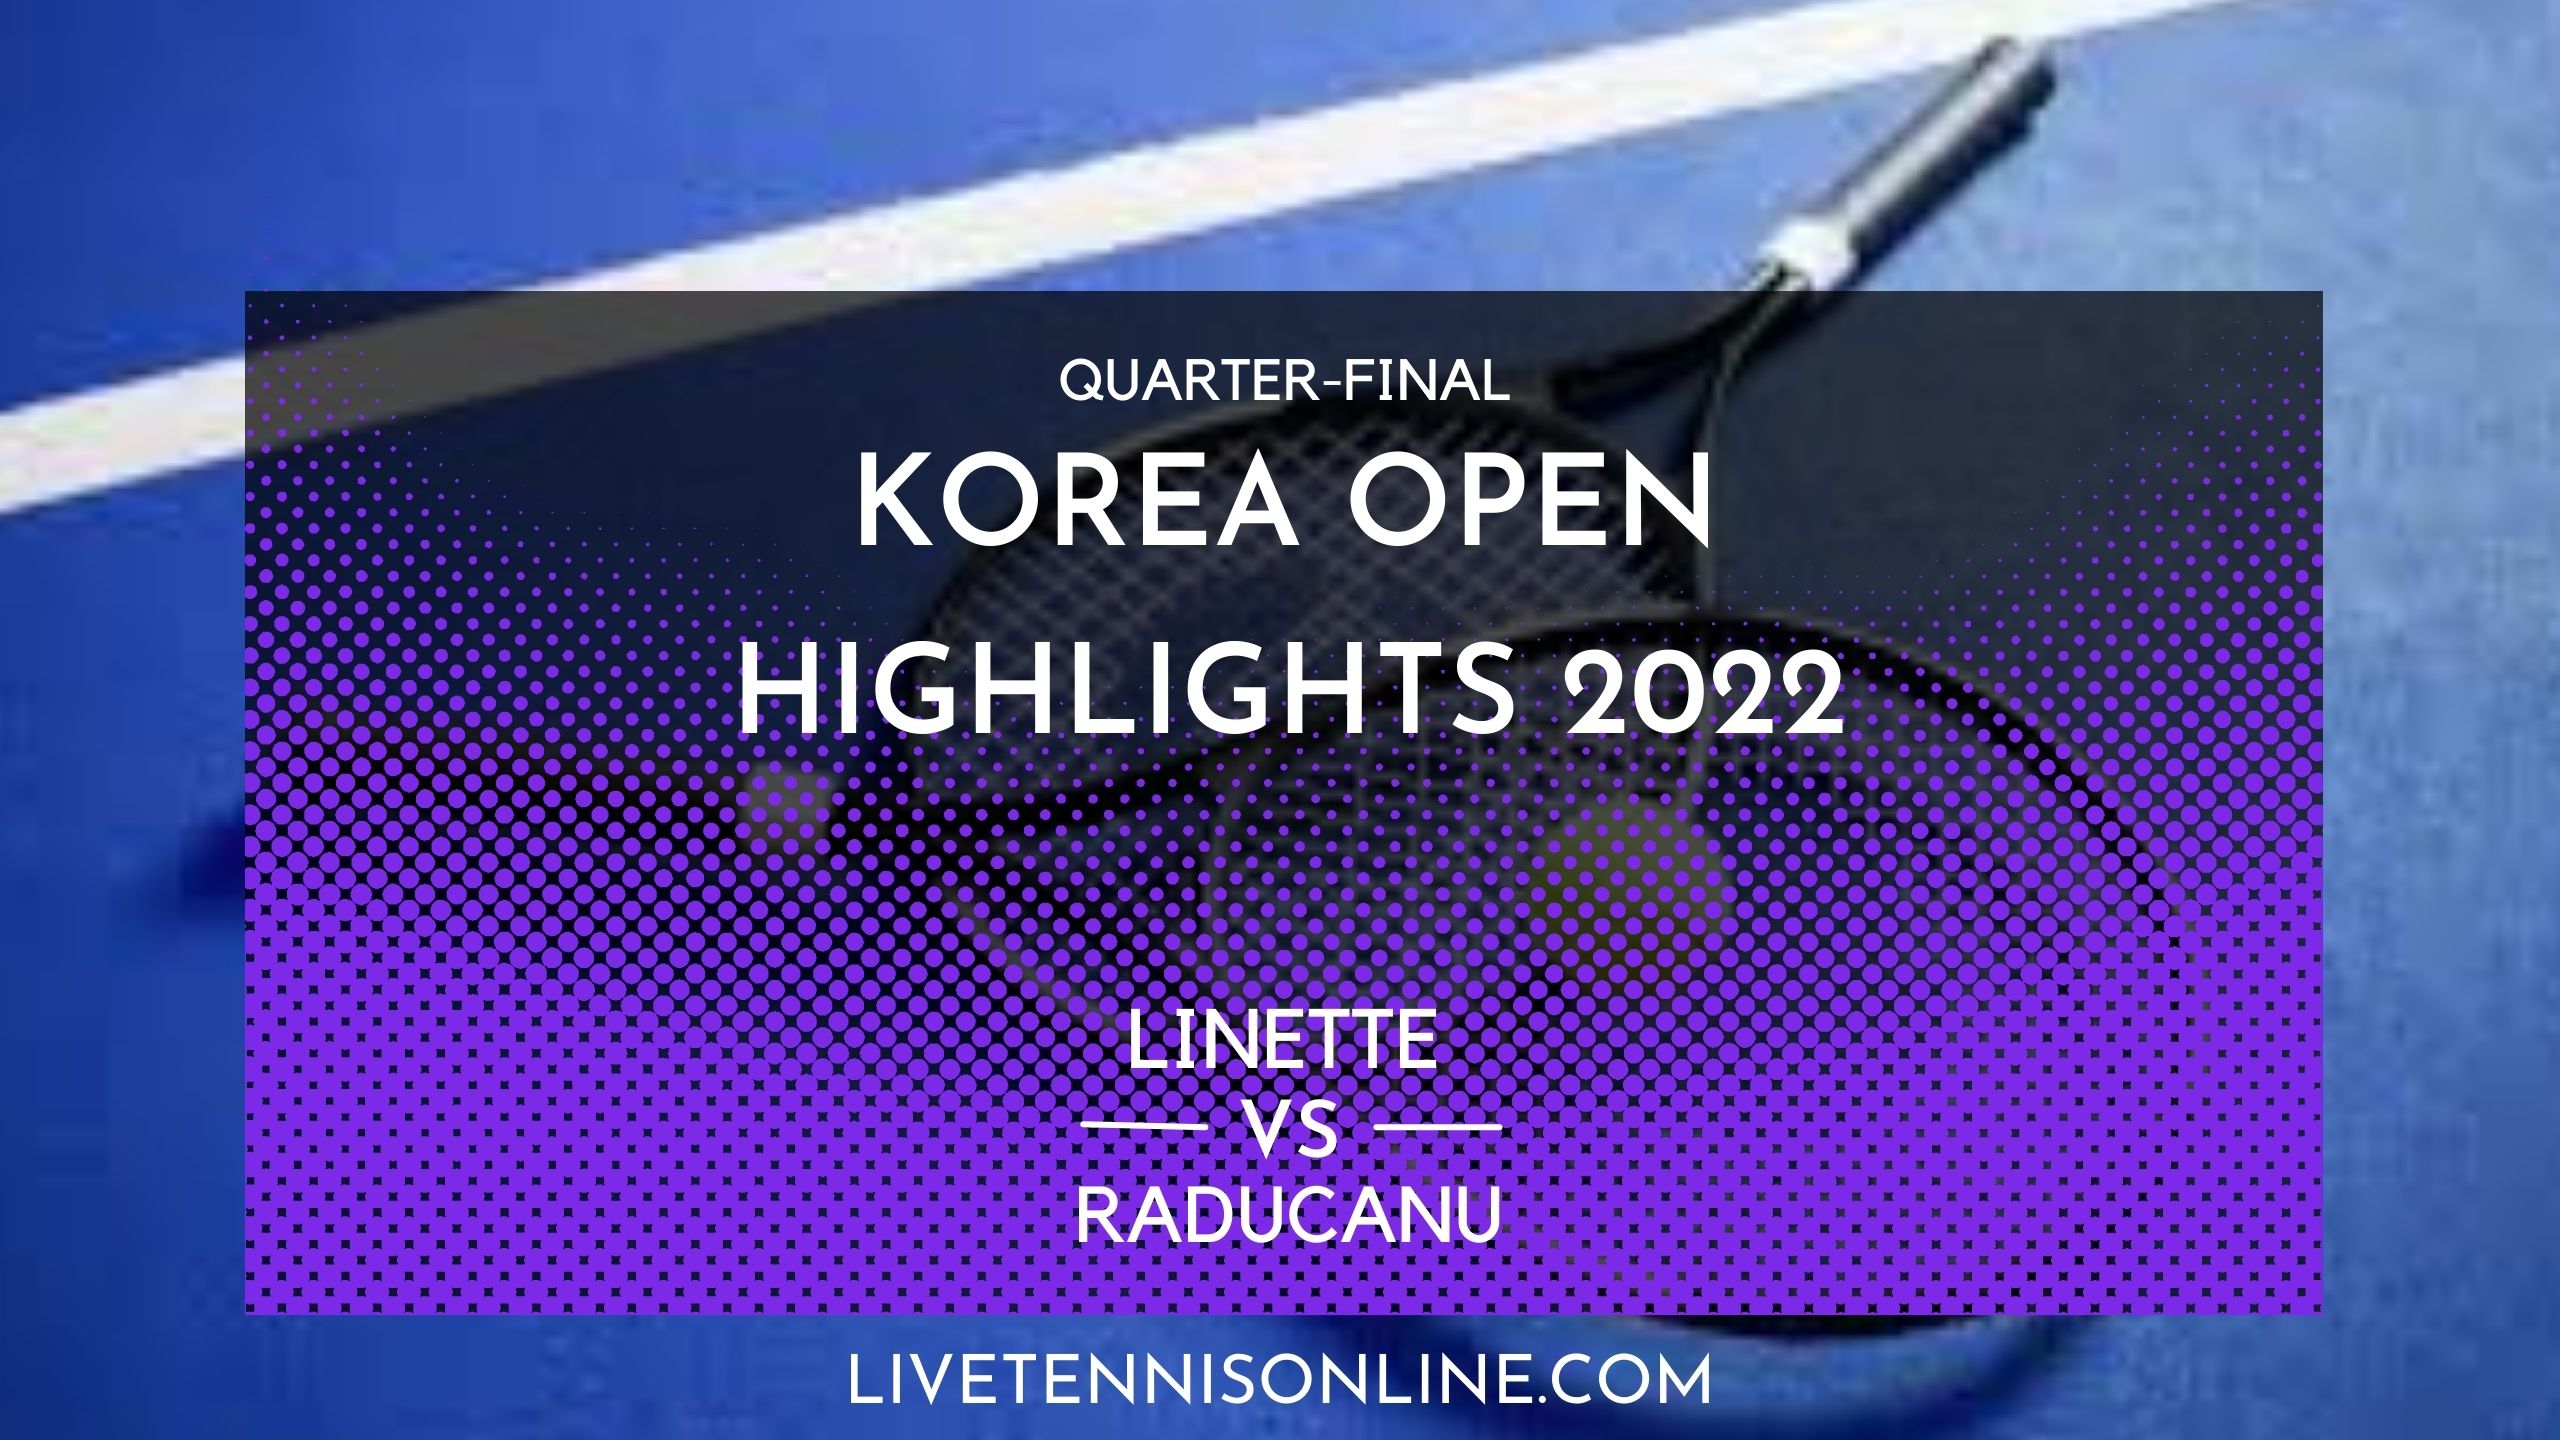 Linette Vs Raducanu QF Highlights 2022 Korea Open